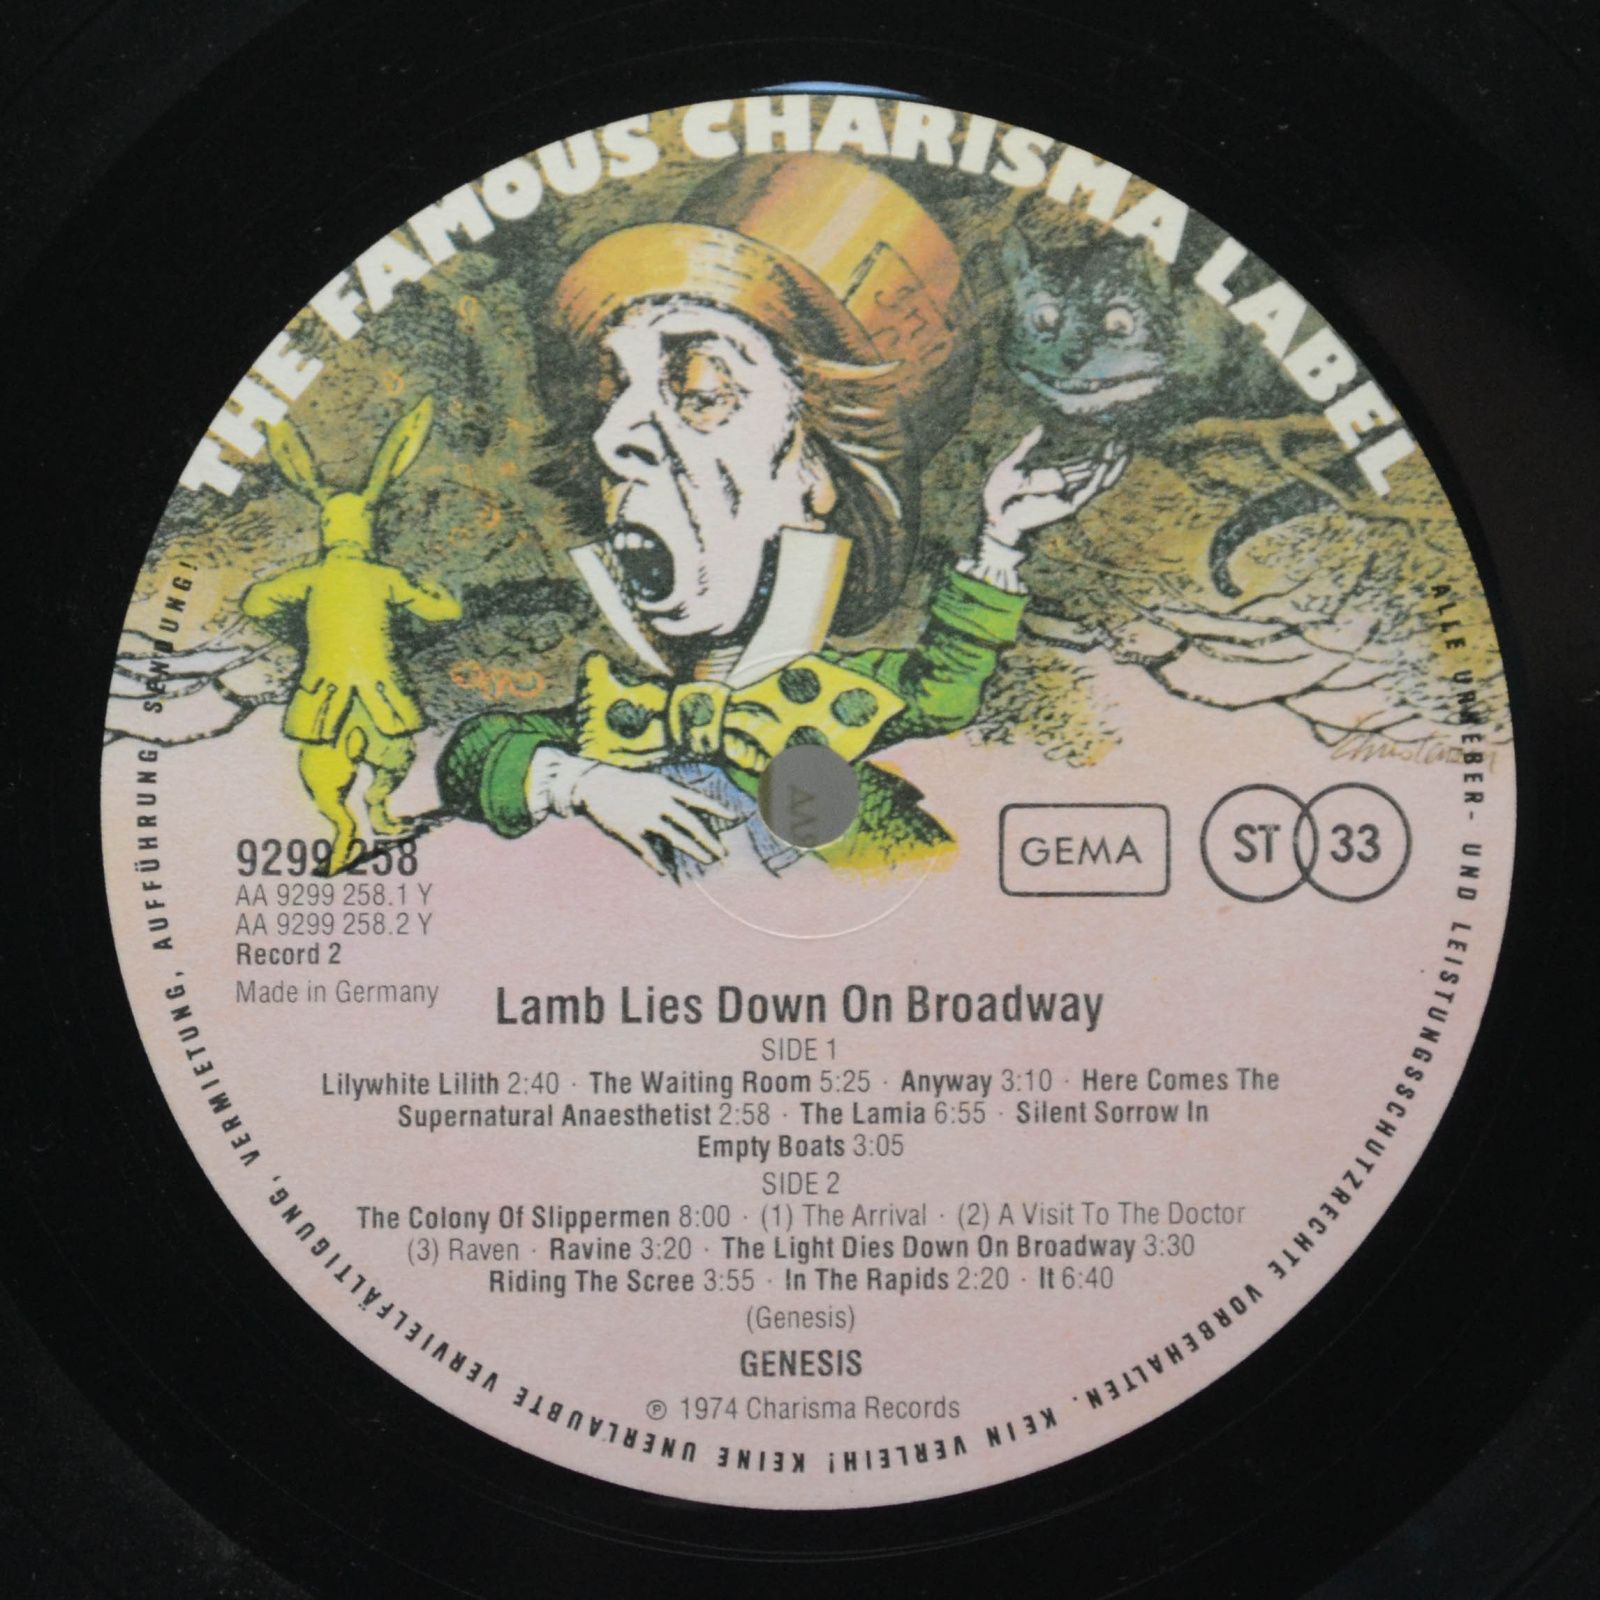 Genesis — The Lamb Lies Down On Broadway (2LP), 1974